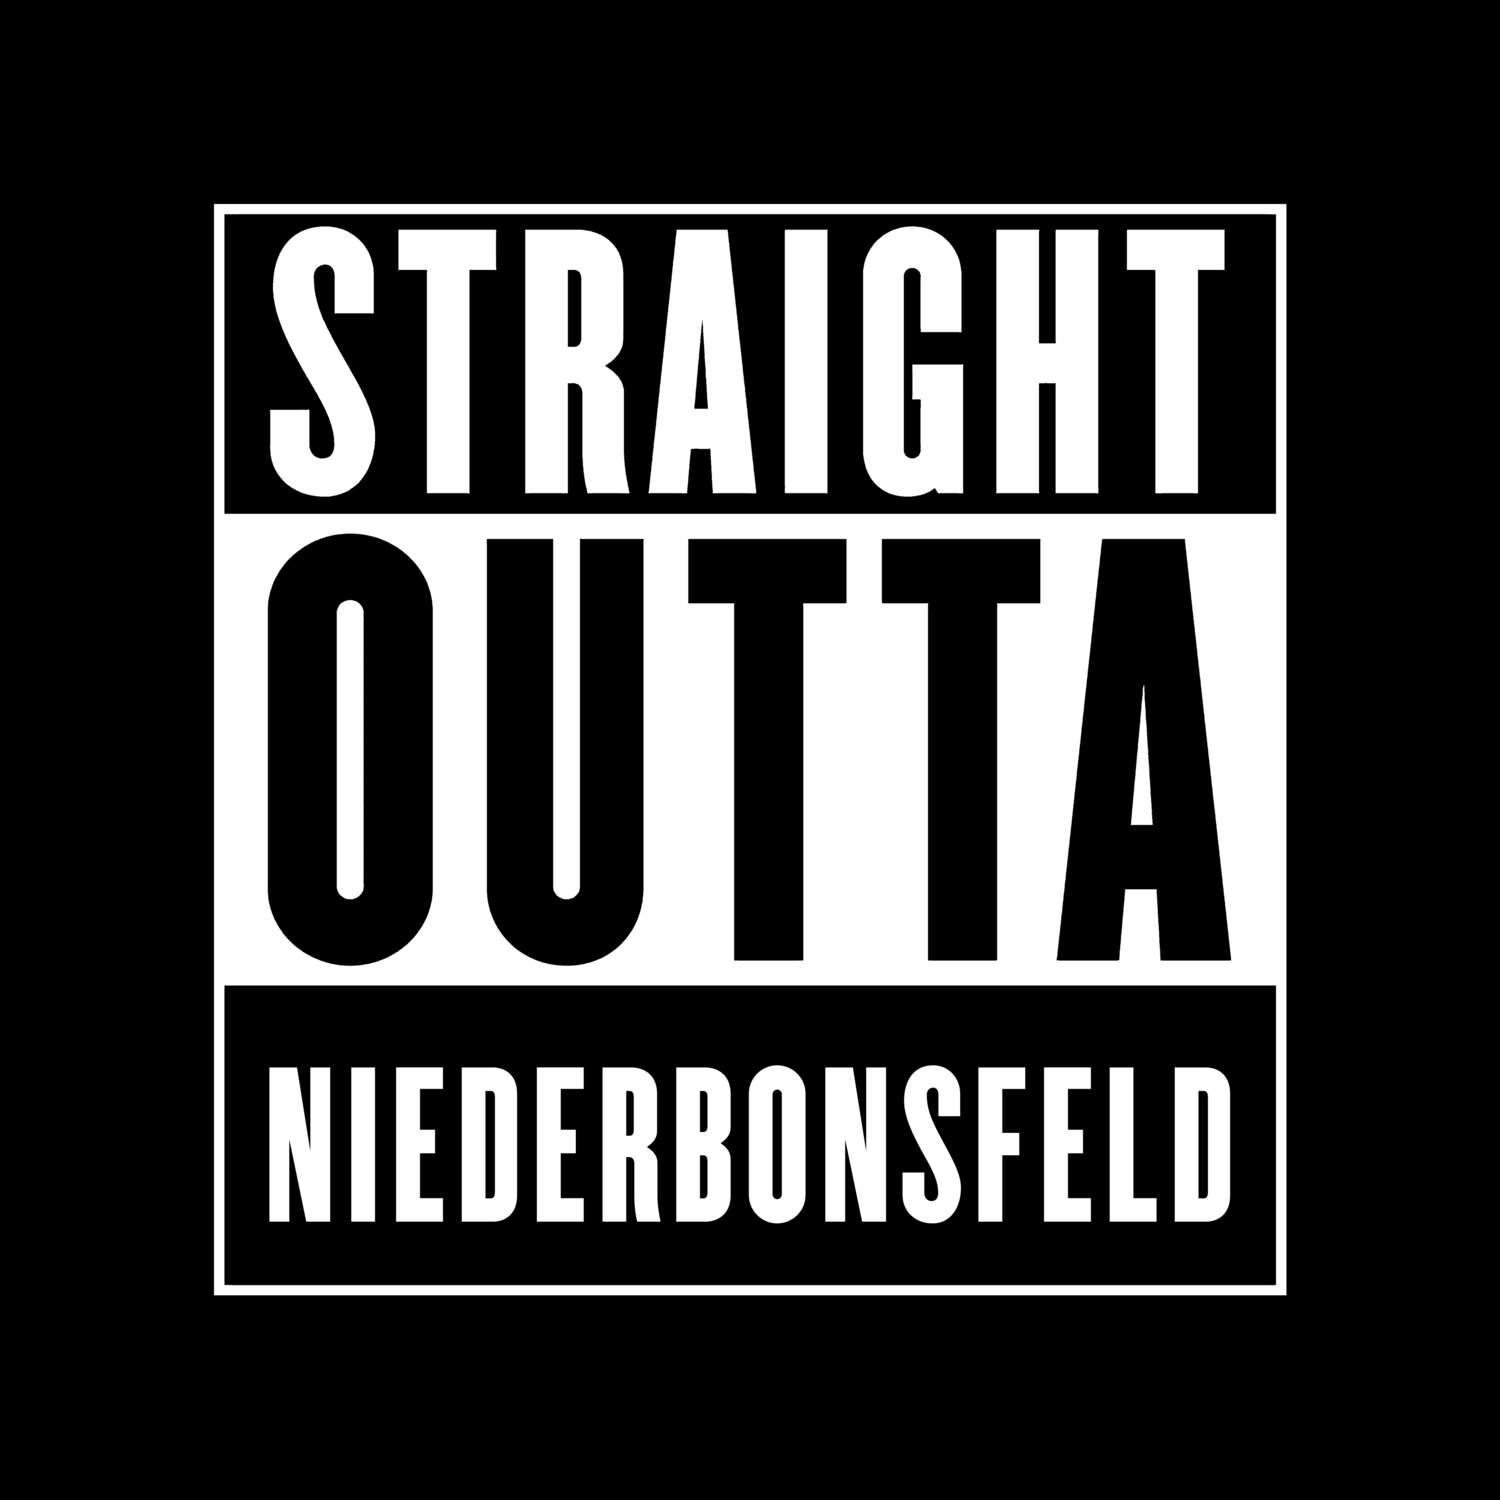 Niederbonsfeld T-Shirt »Straight Outta«